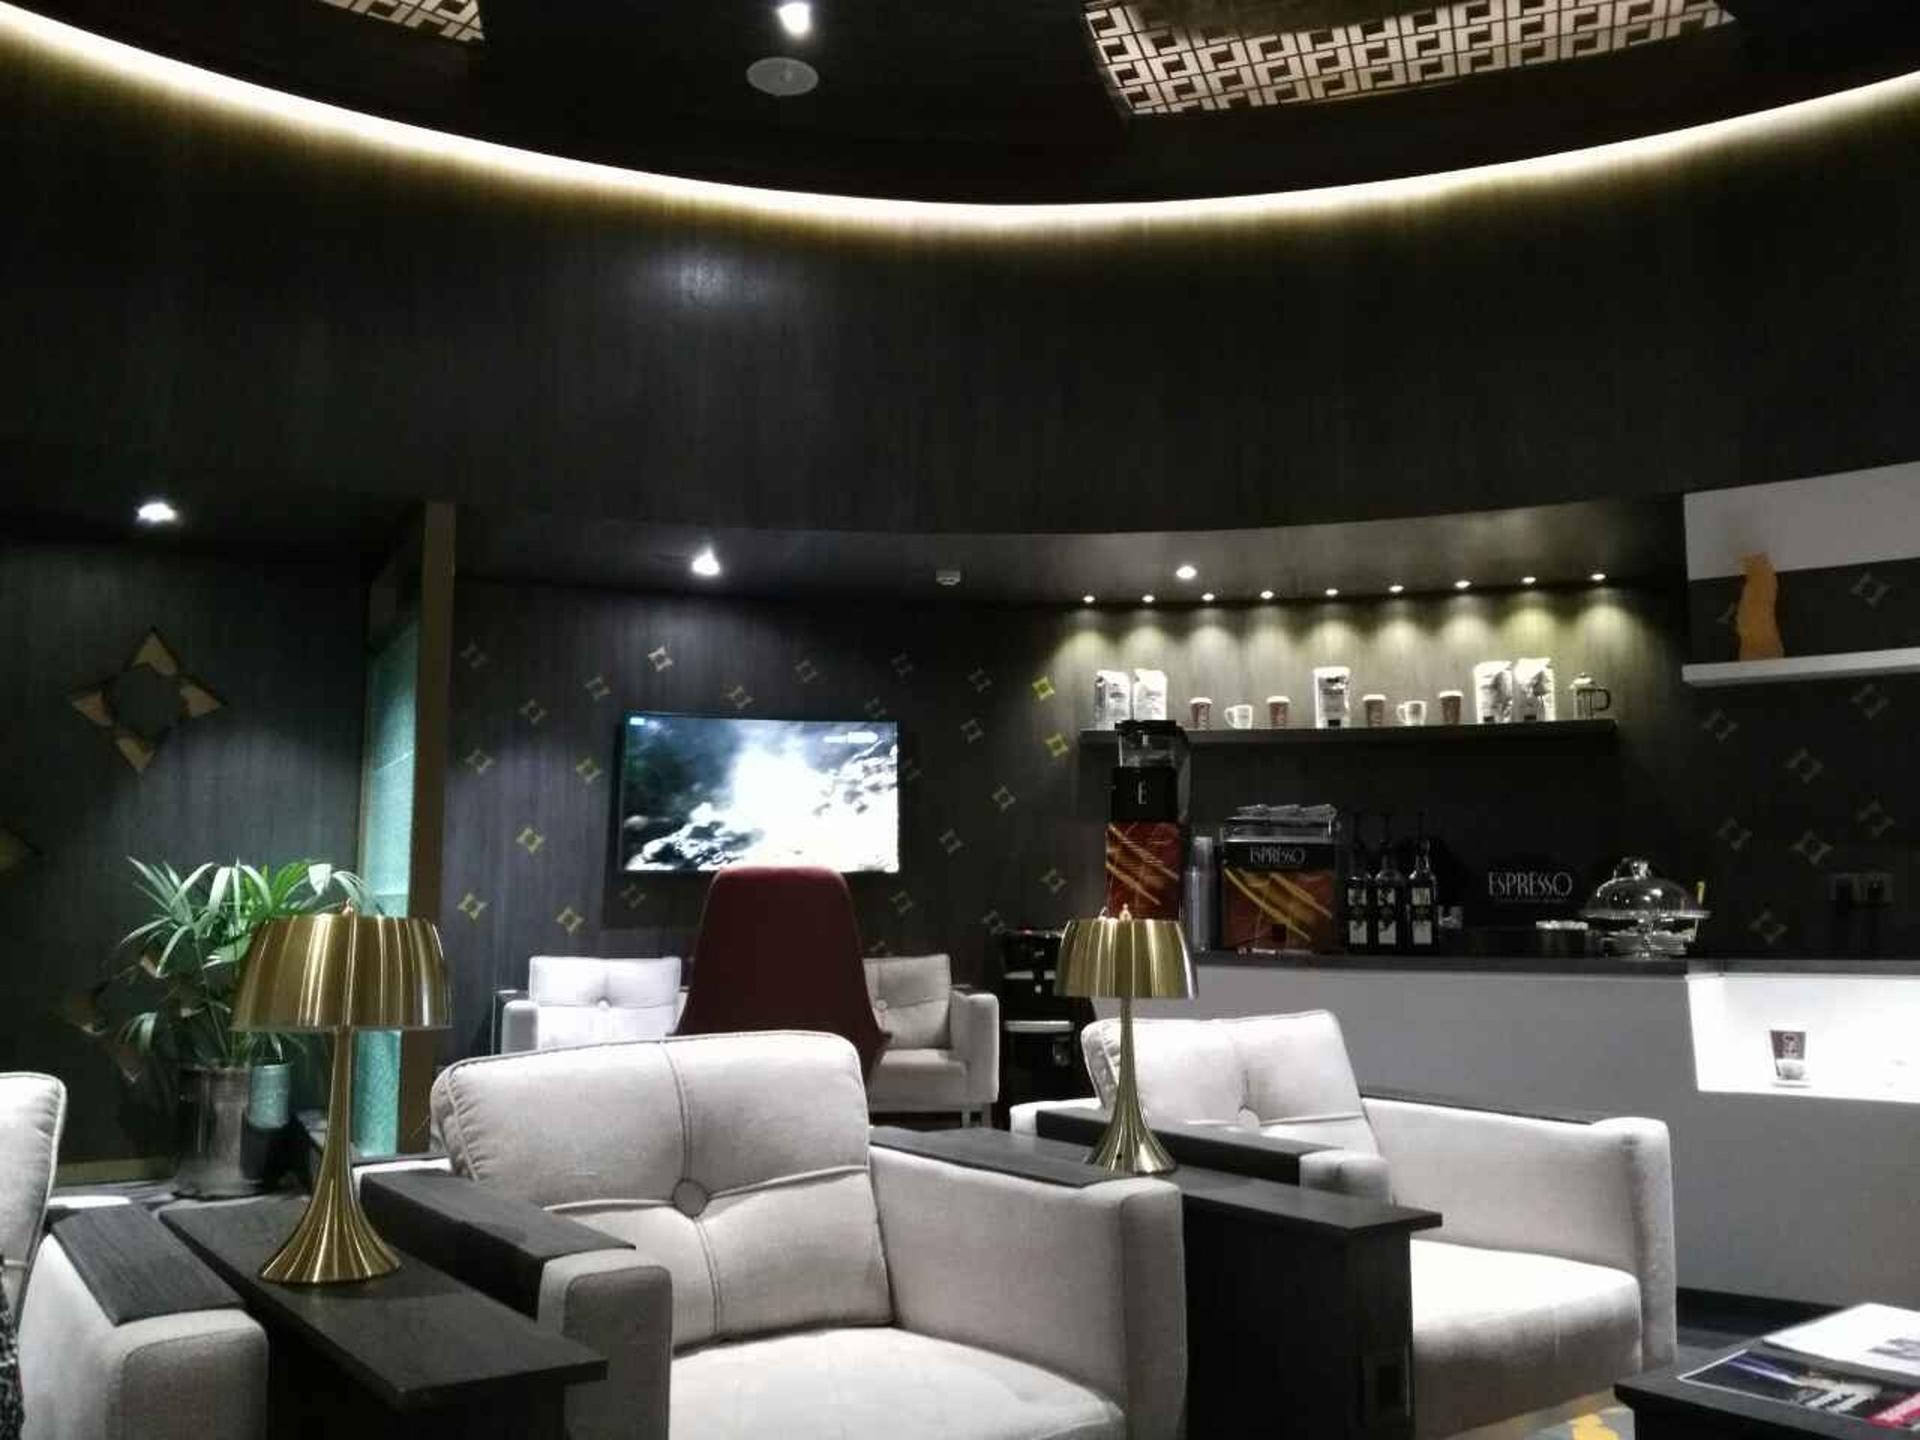 Bank Alfalah Premier Lounge (International) image 9 of 9